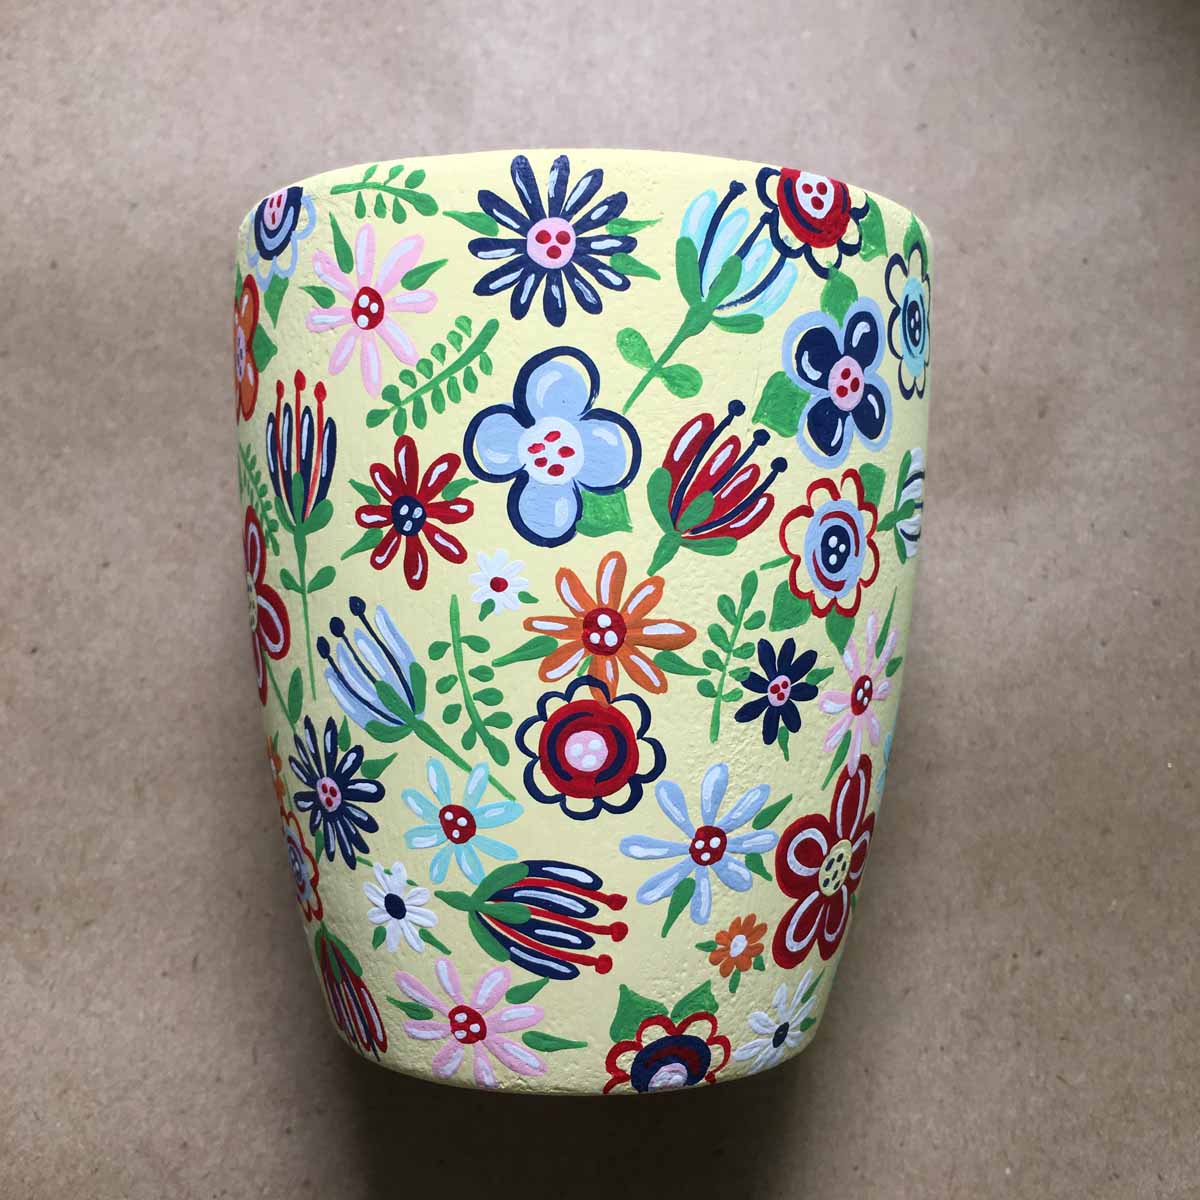 DIY Mother's Day Vases